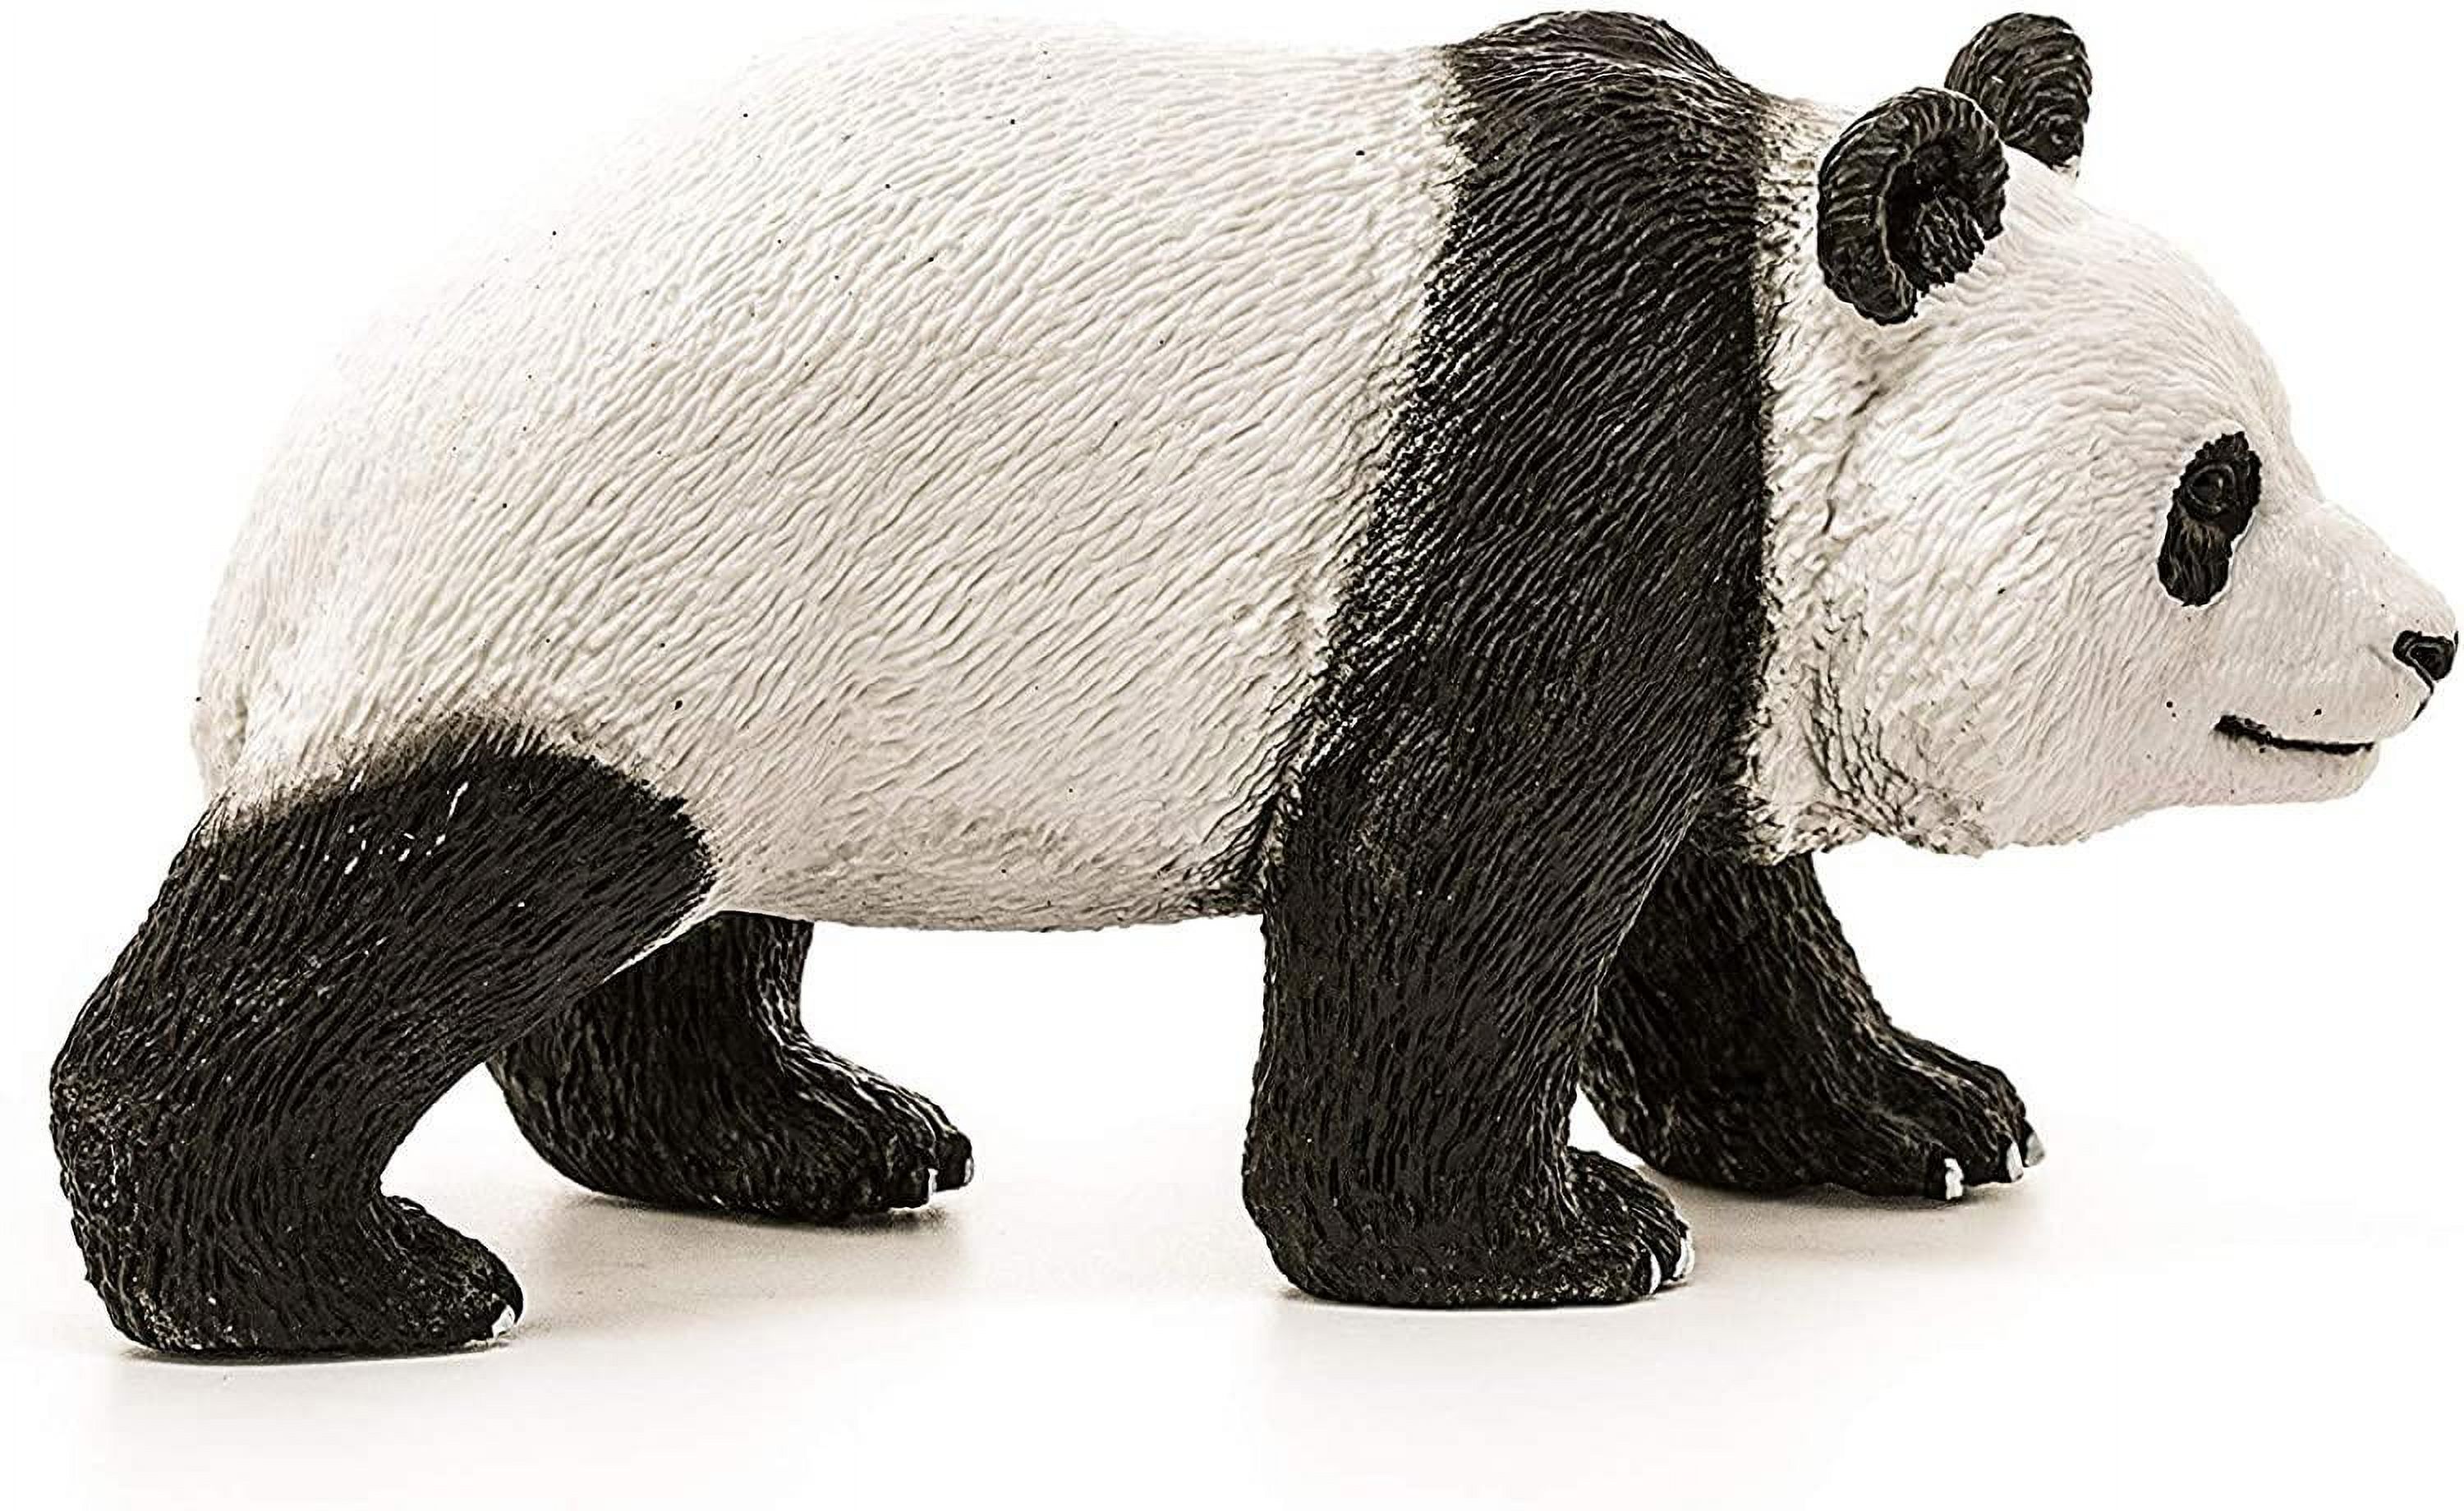 Schleich Wild Life Panda Male Toy Figurine - image 2 of 4